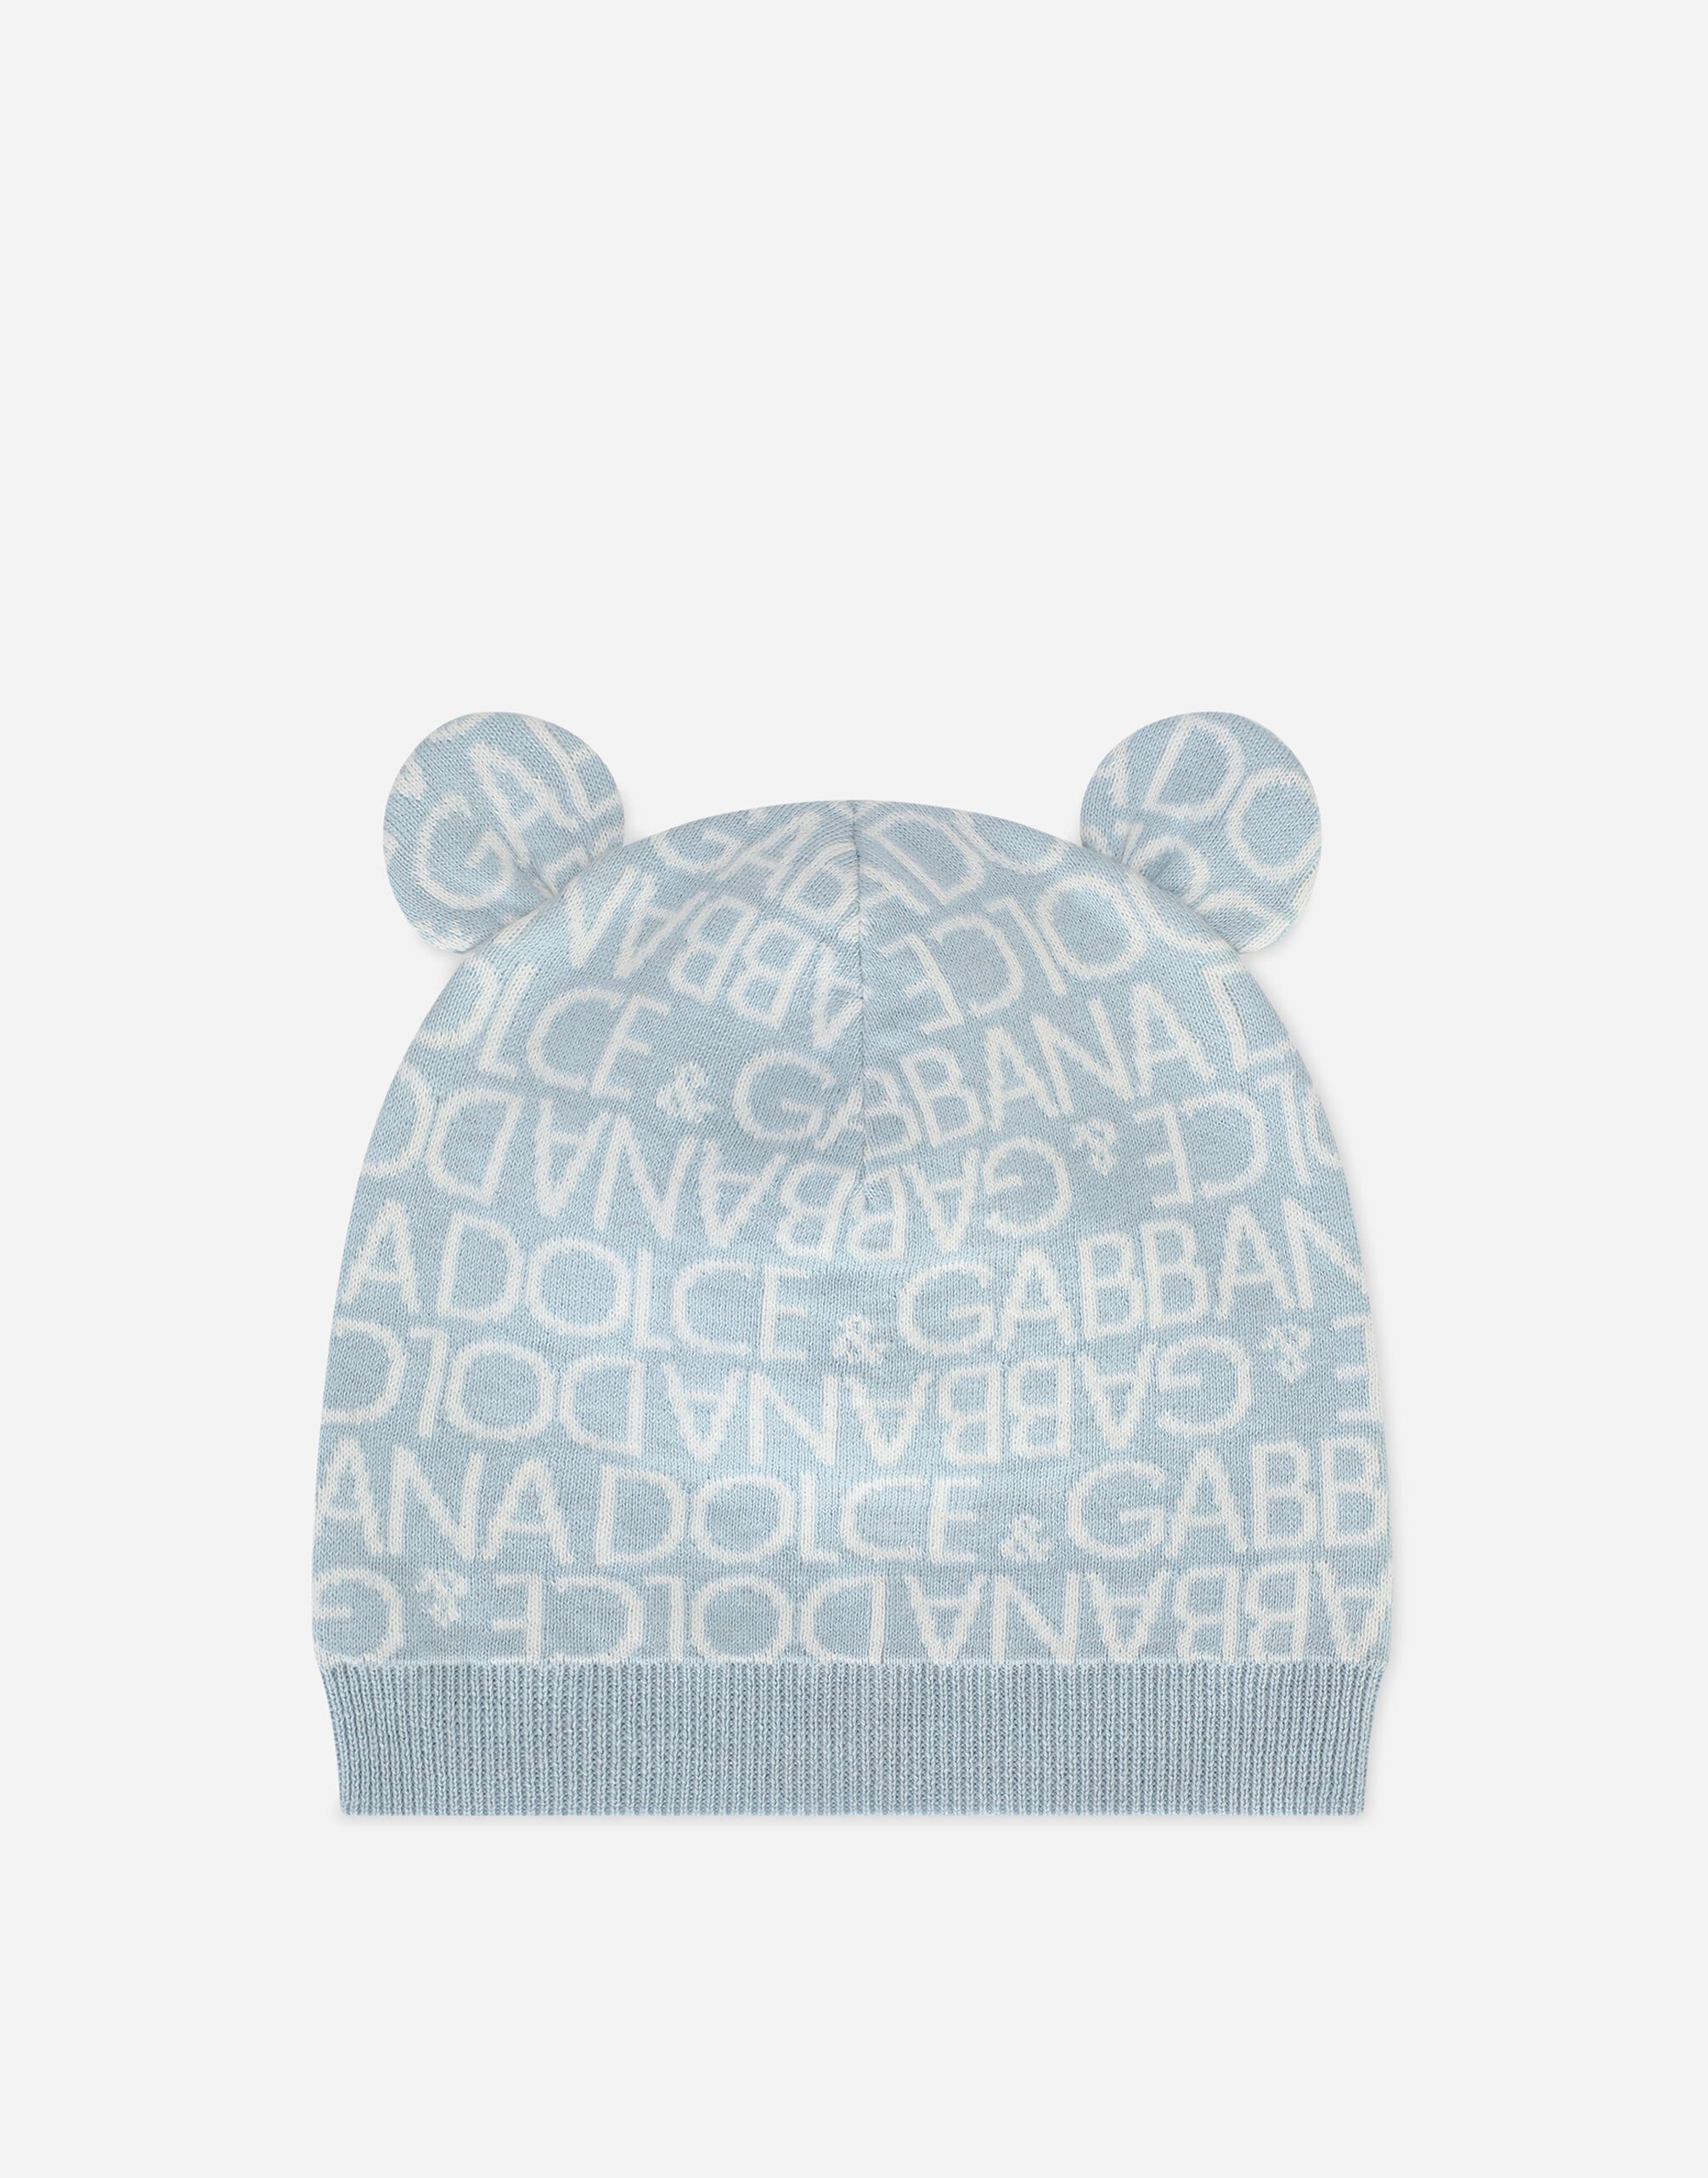 Dolce & Gabbana Knit hat with jacquard logo and ears Print LNJAD5G7K6O